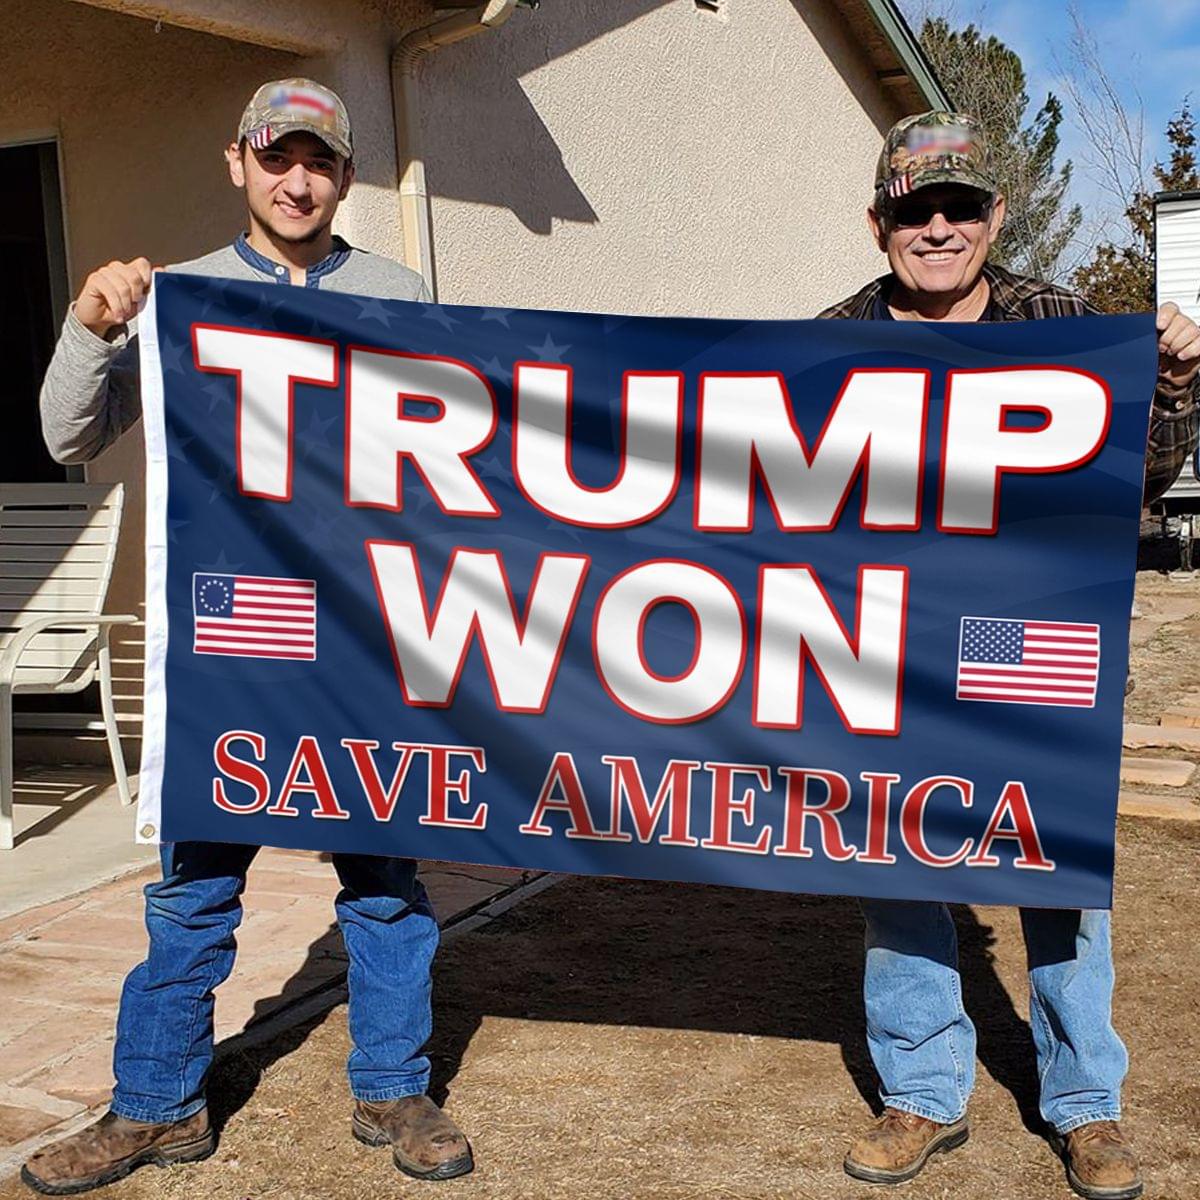 24 Trump won save america Flag 1